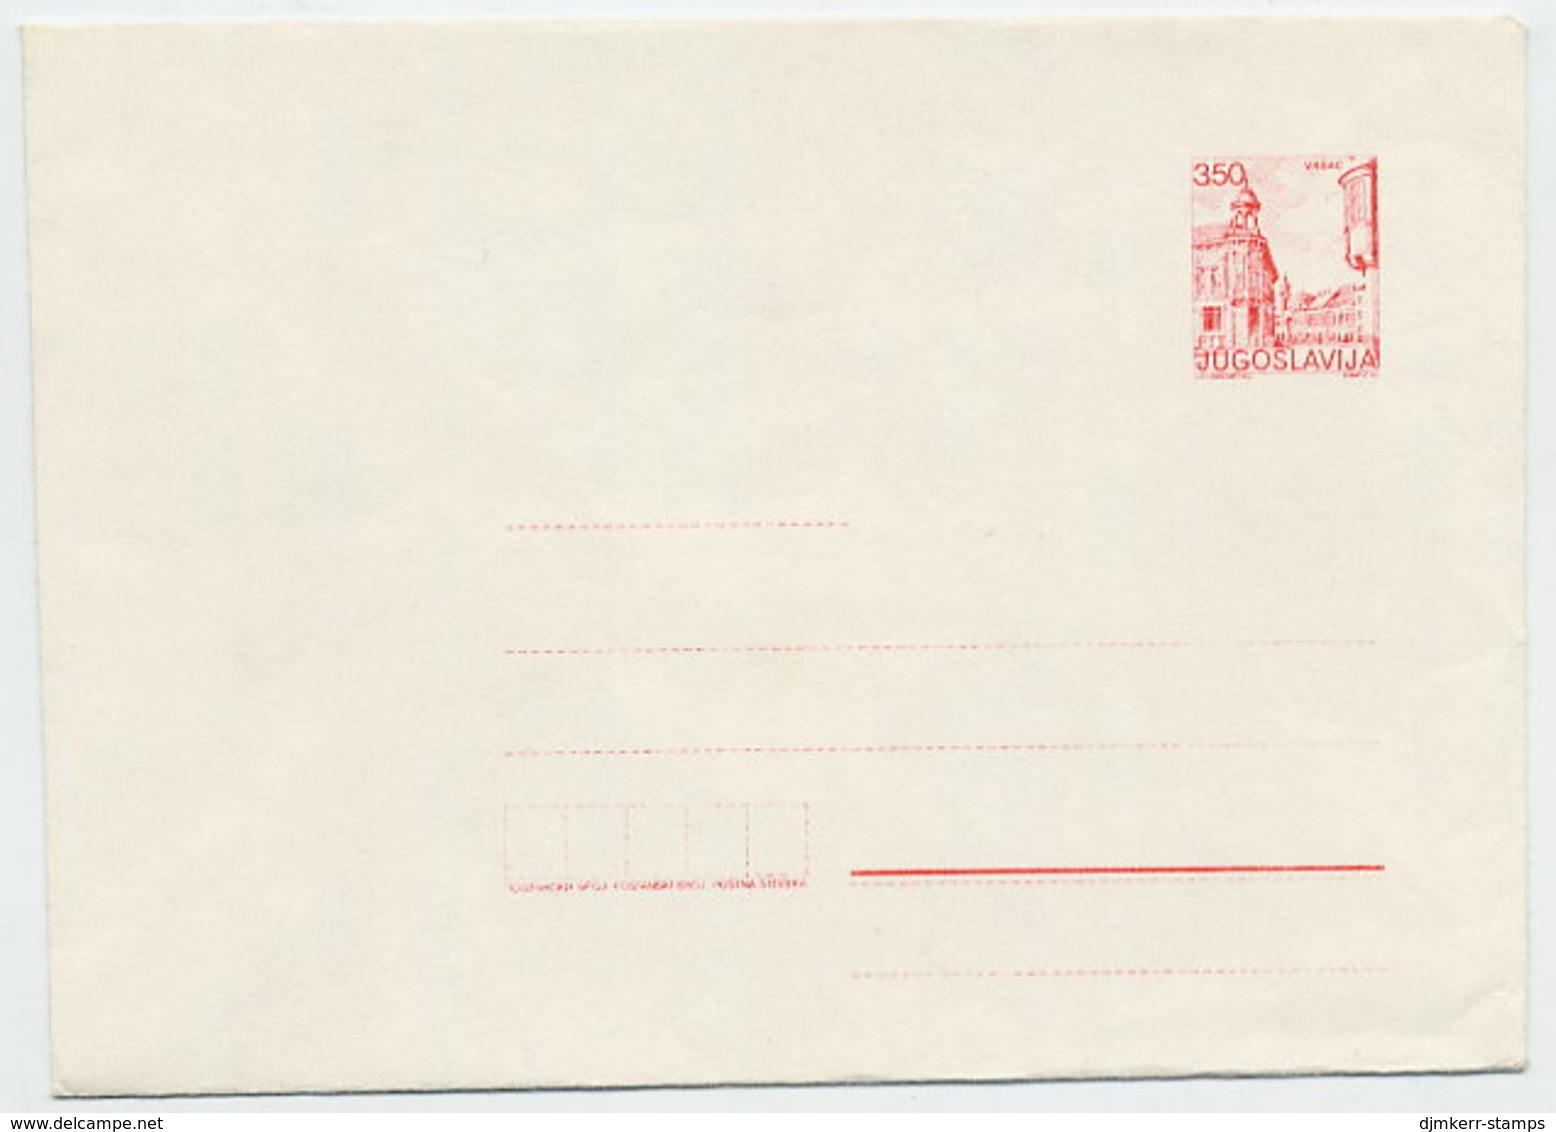 YUGOSLAVIA 1981 Tourism 3.50 D. Envelope, Unused. Michel U63 - Interi Postali